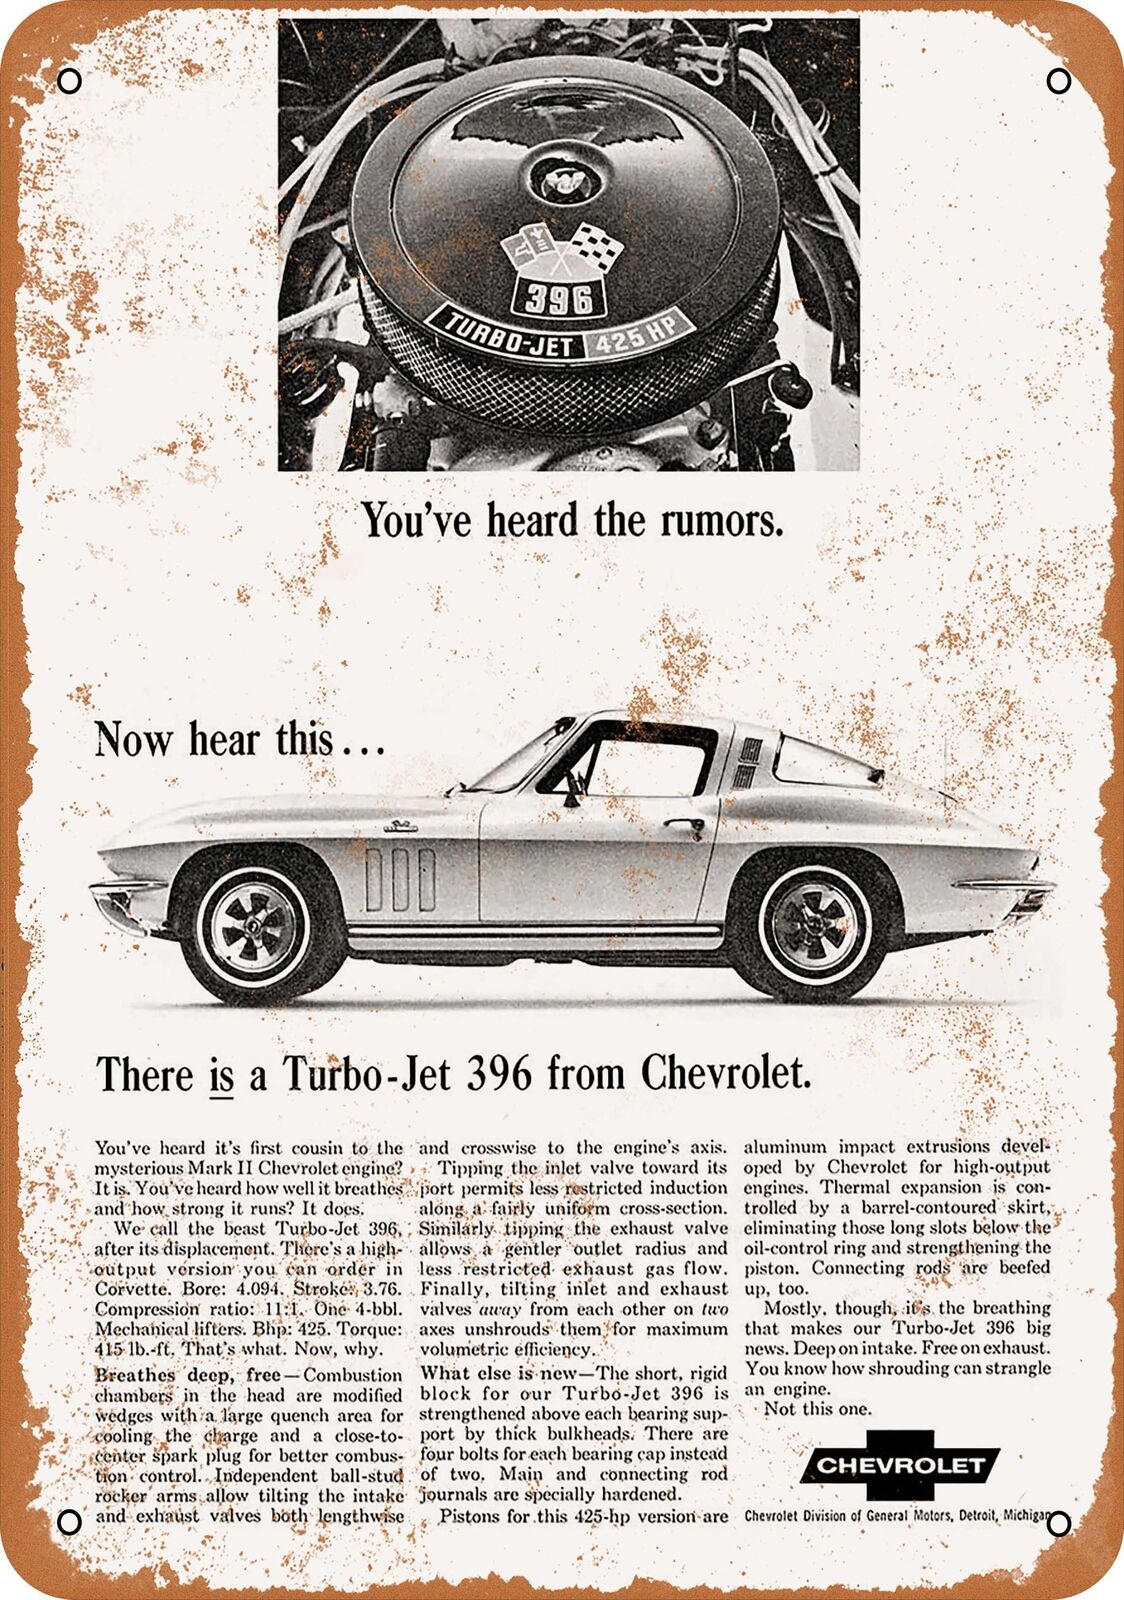 Metal Sign - 1965 Chevy Turbo-Jet 396 425 hp Engine -- Vintage Look